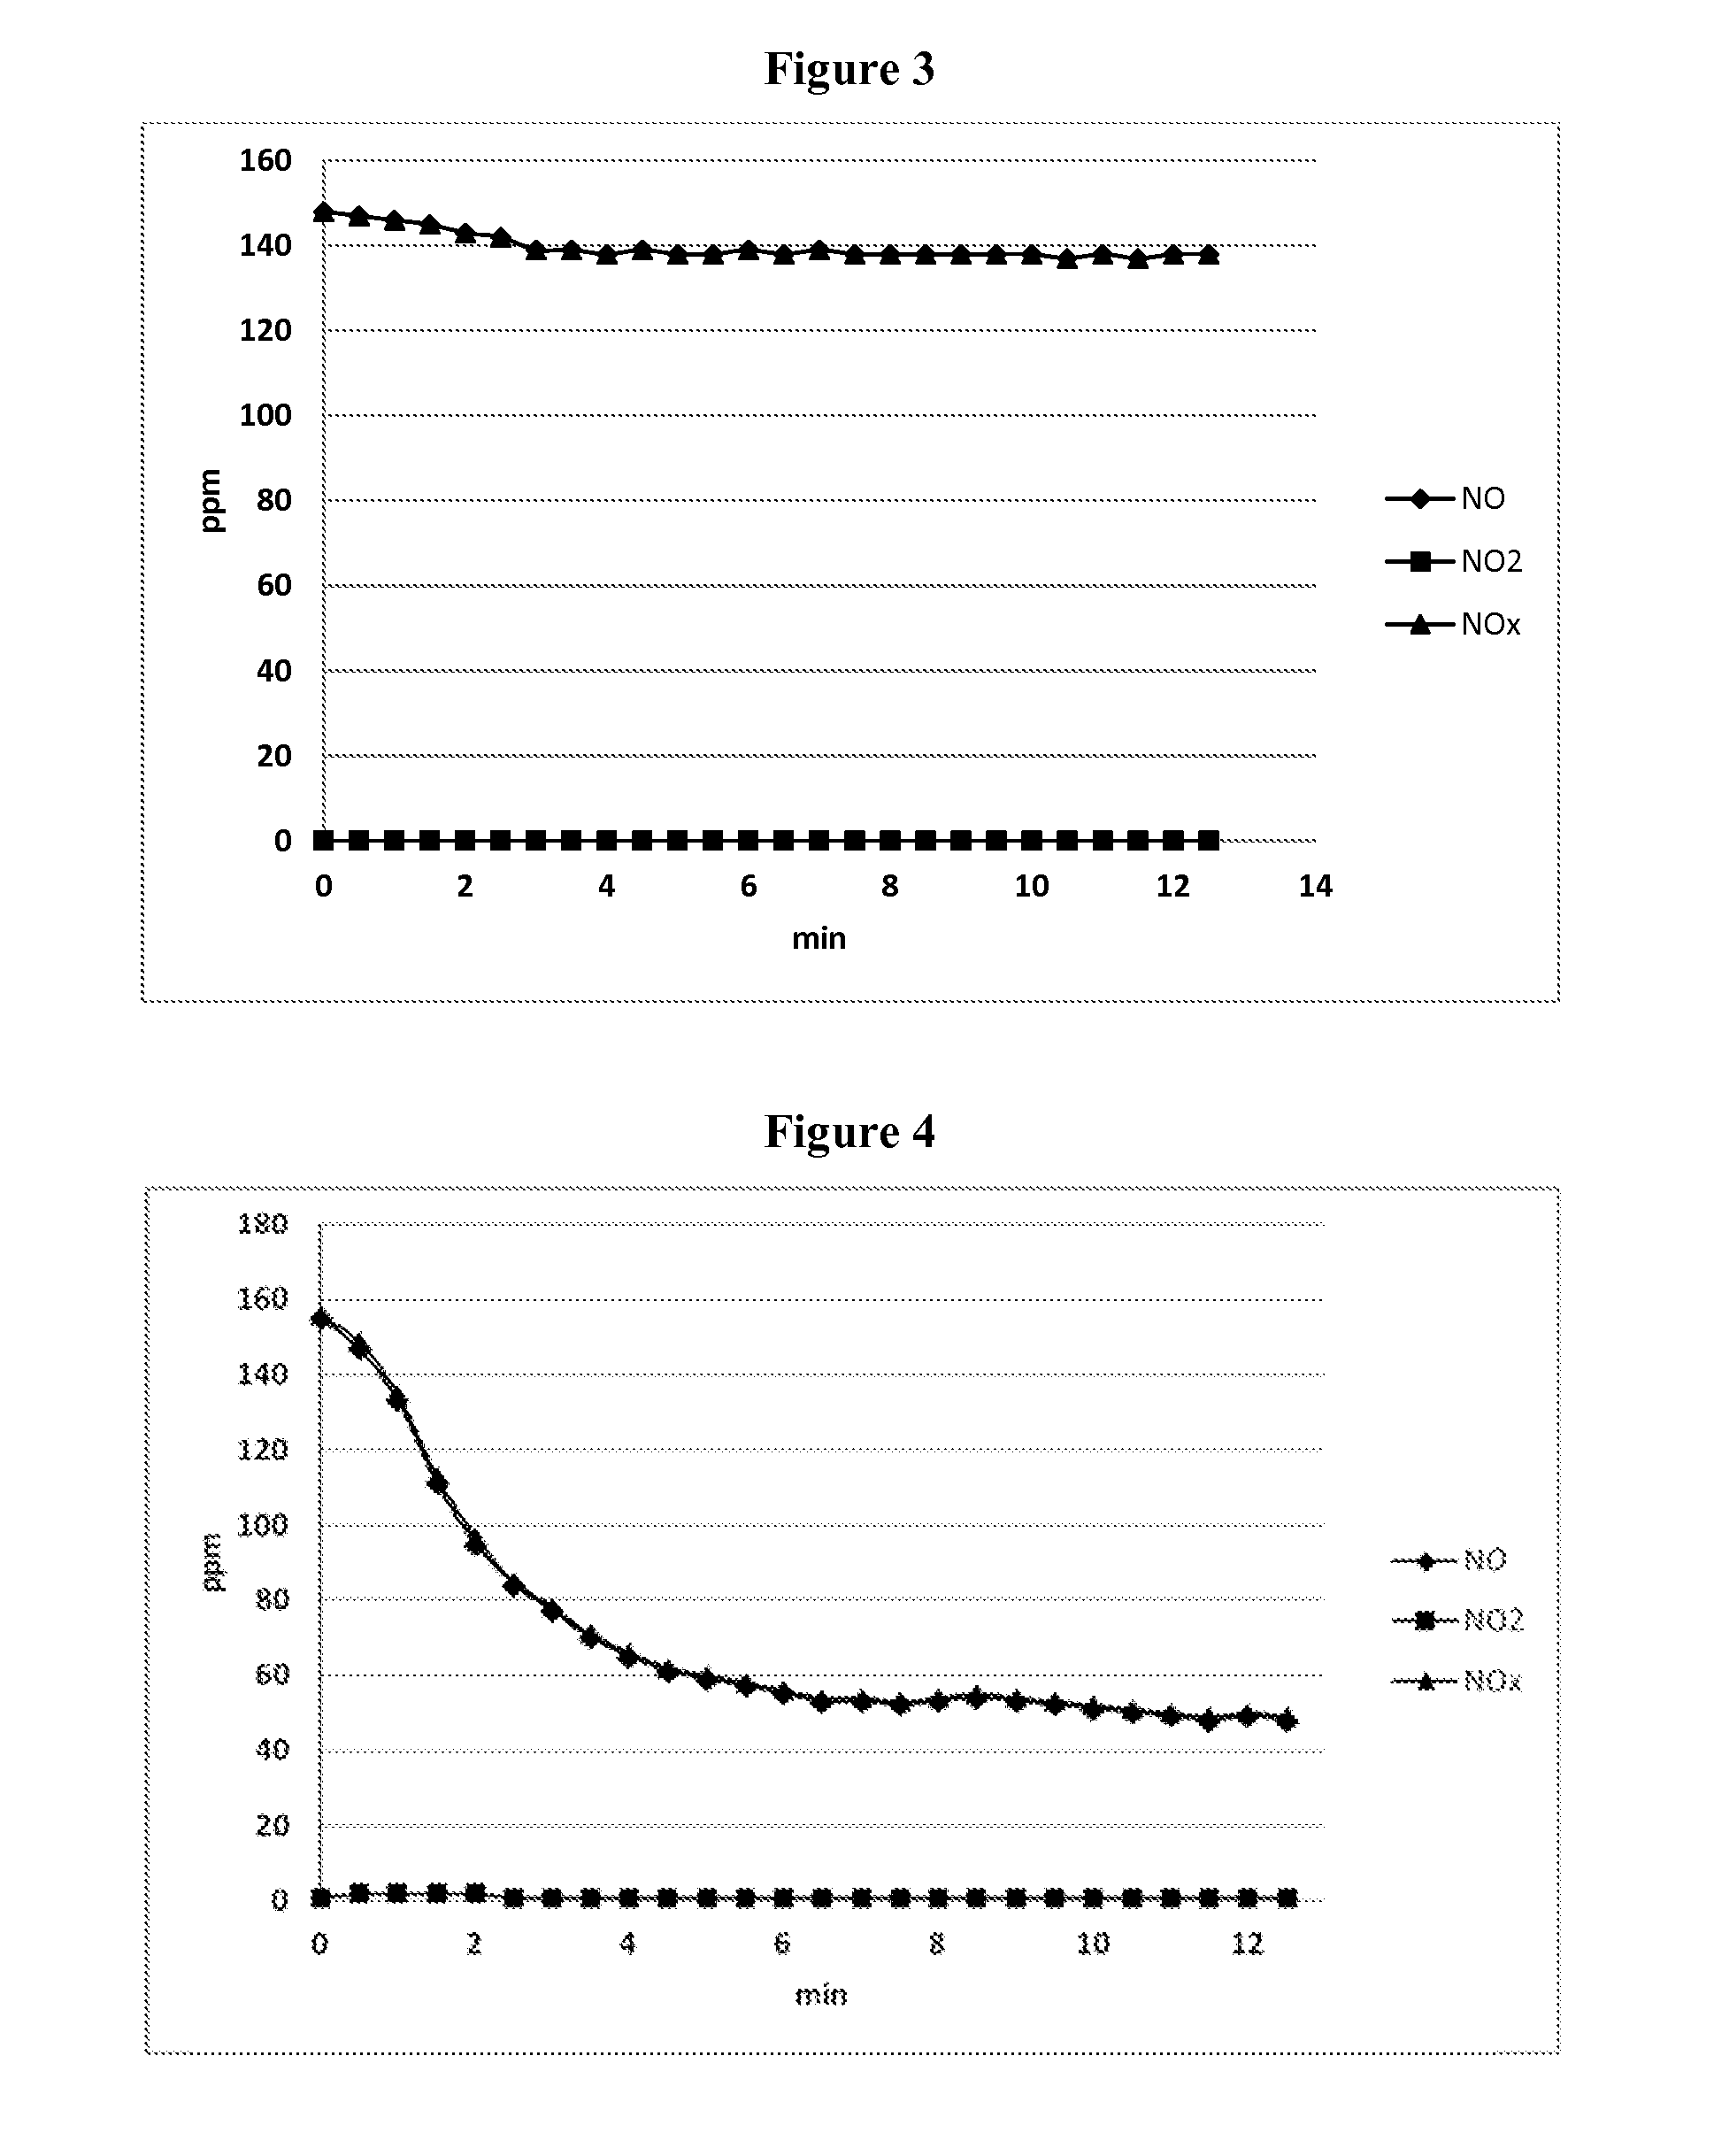 Treatment of nitrogen oxides in flue gas streams